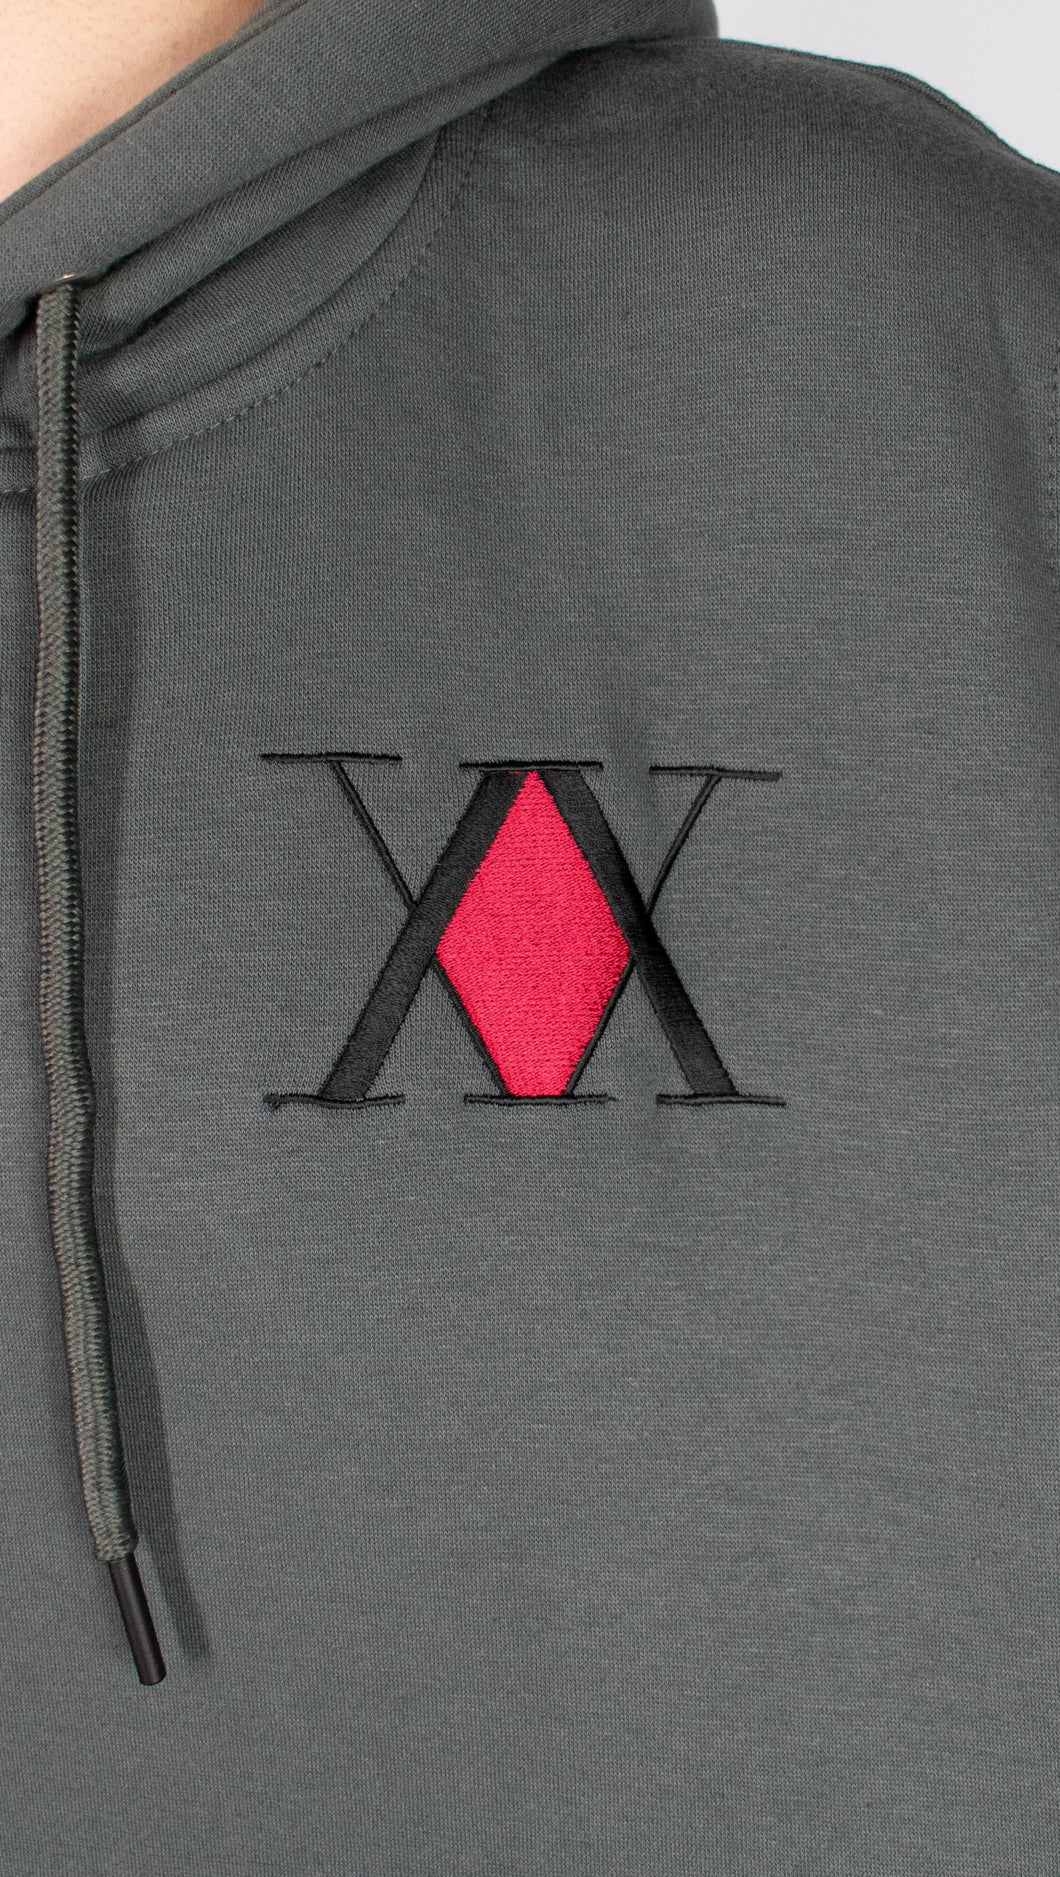 HxH Symbol Embroidered Dark Grey Hoodie